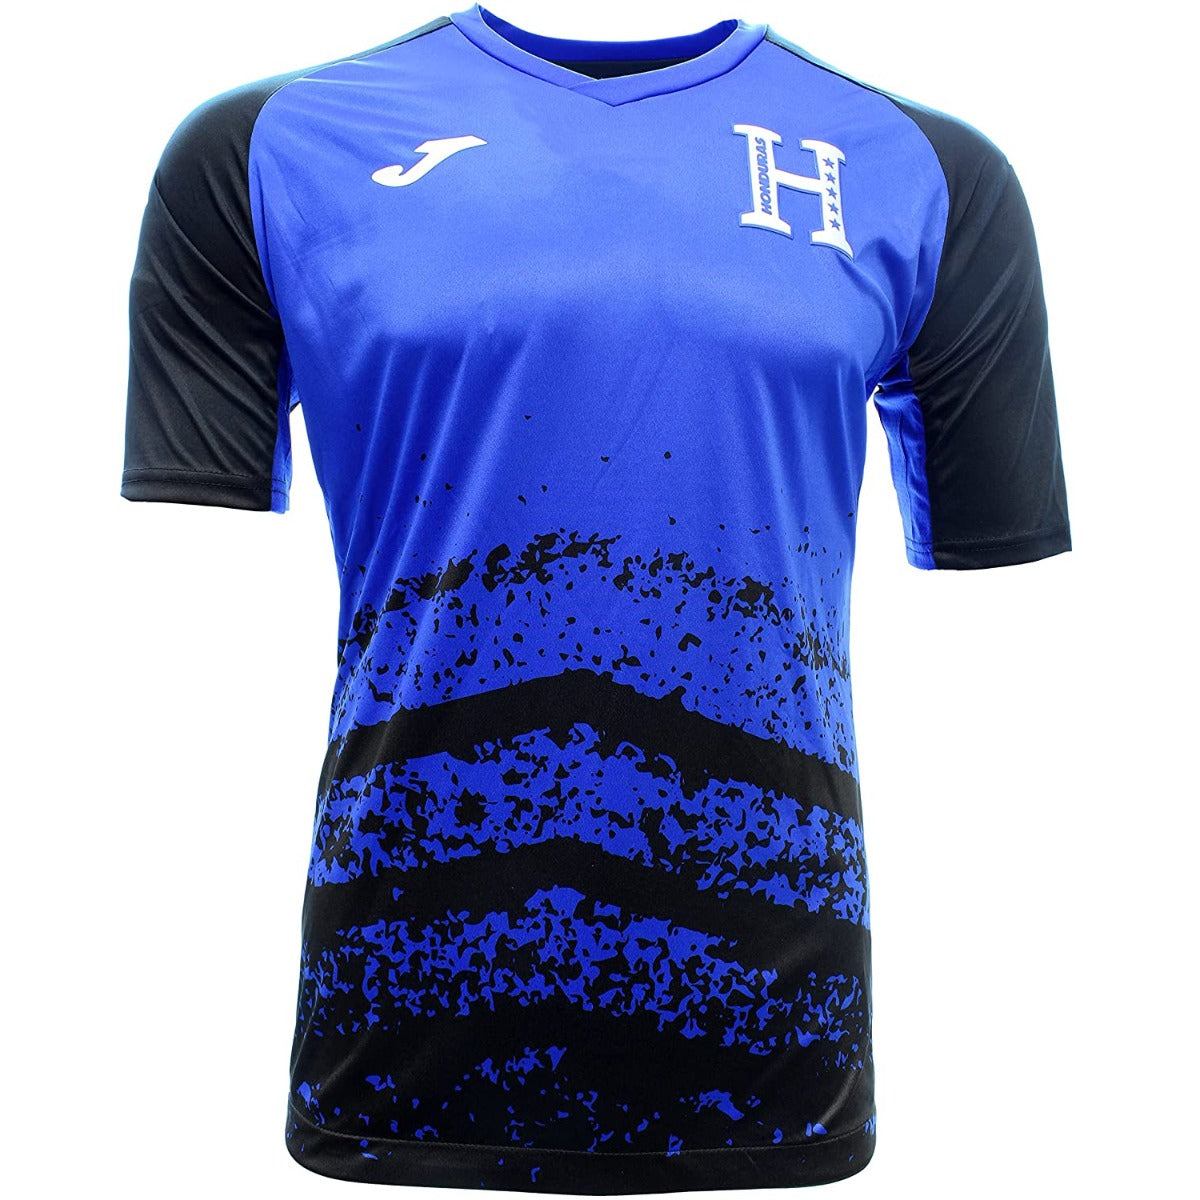 Joma 2021-22 Honduras Away jersey - Black-Royal (Front)